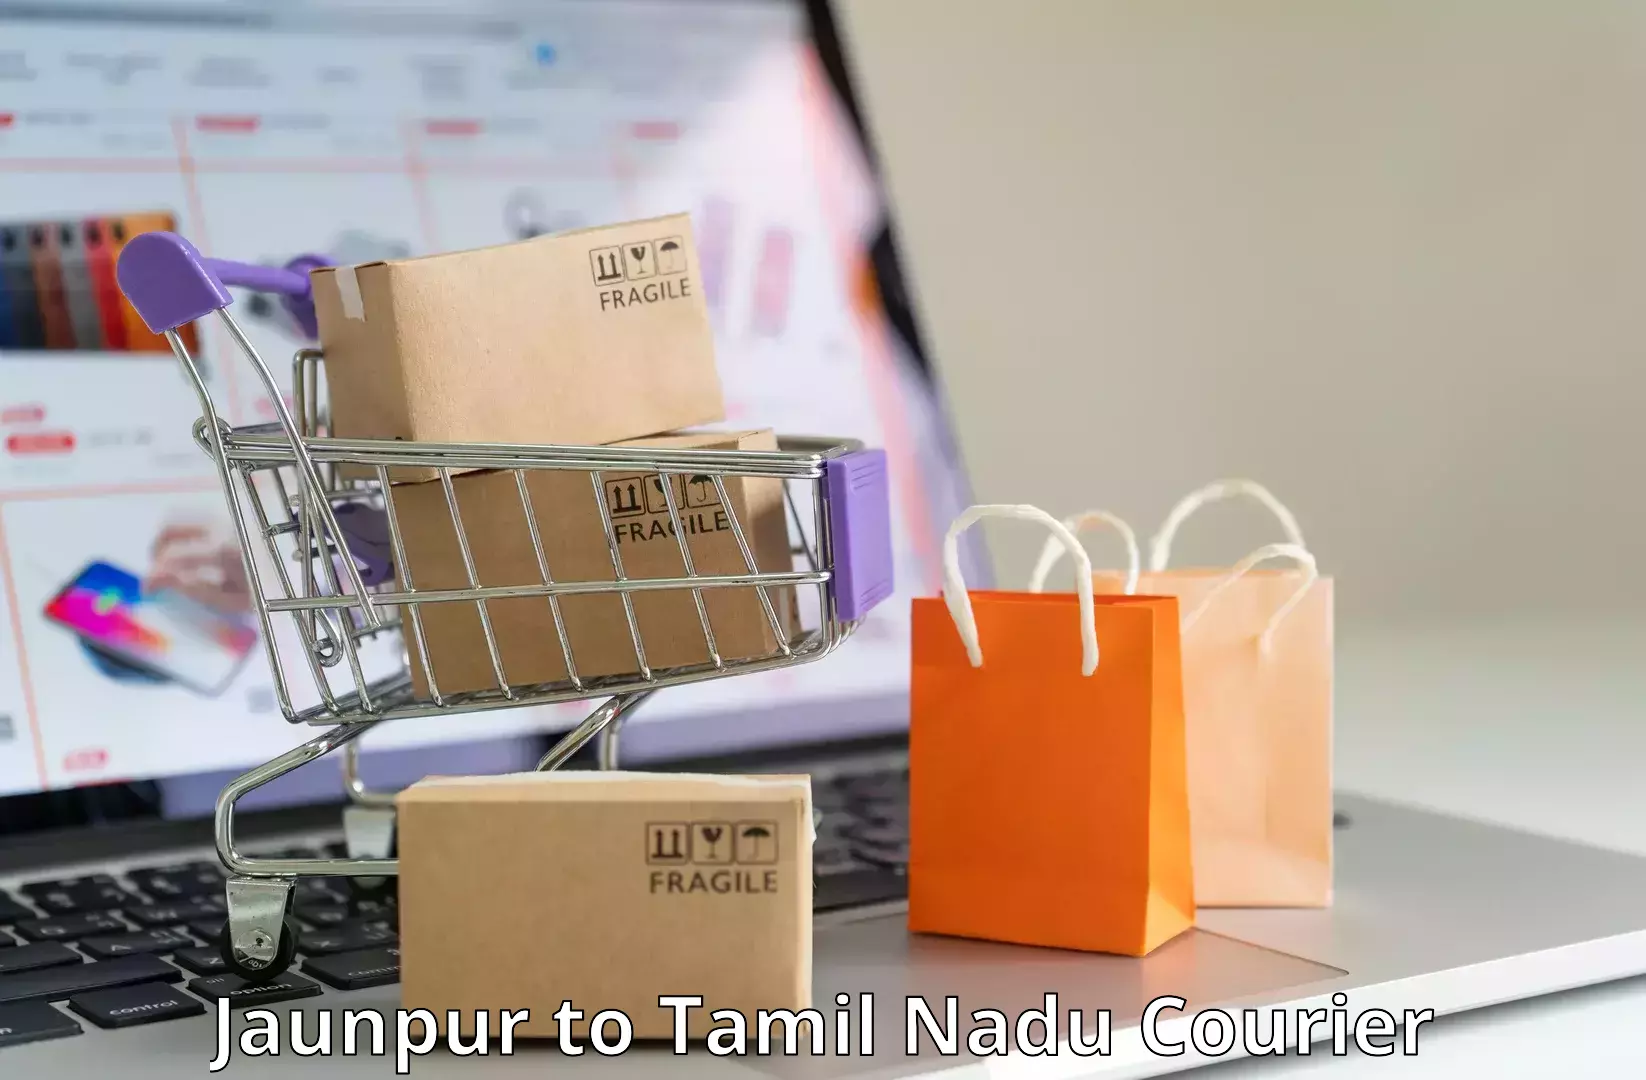 Cost-effective courier options Jaunpur to Lalgudi